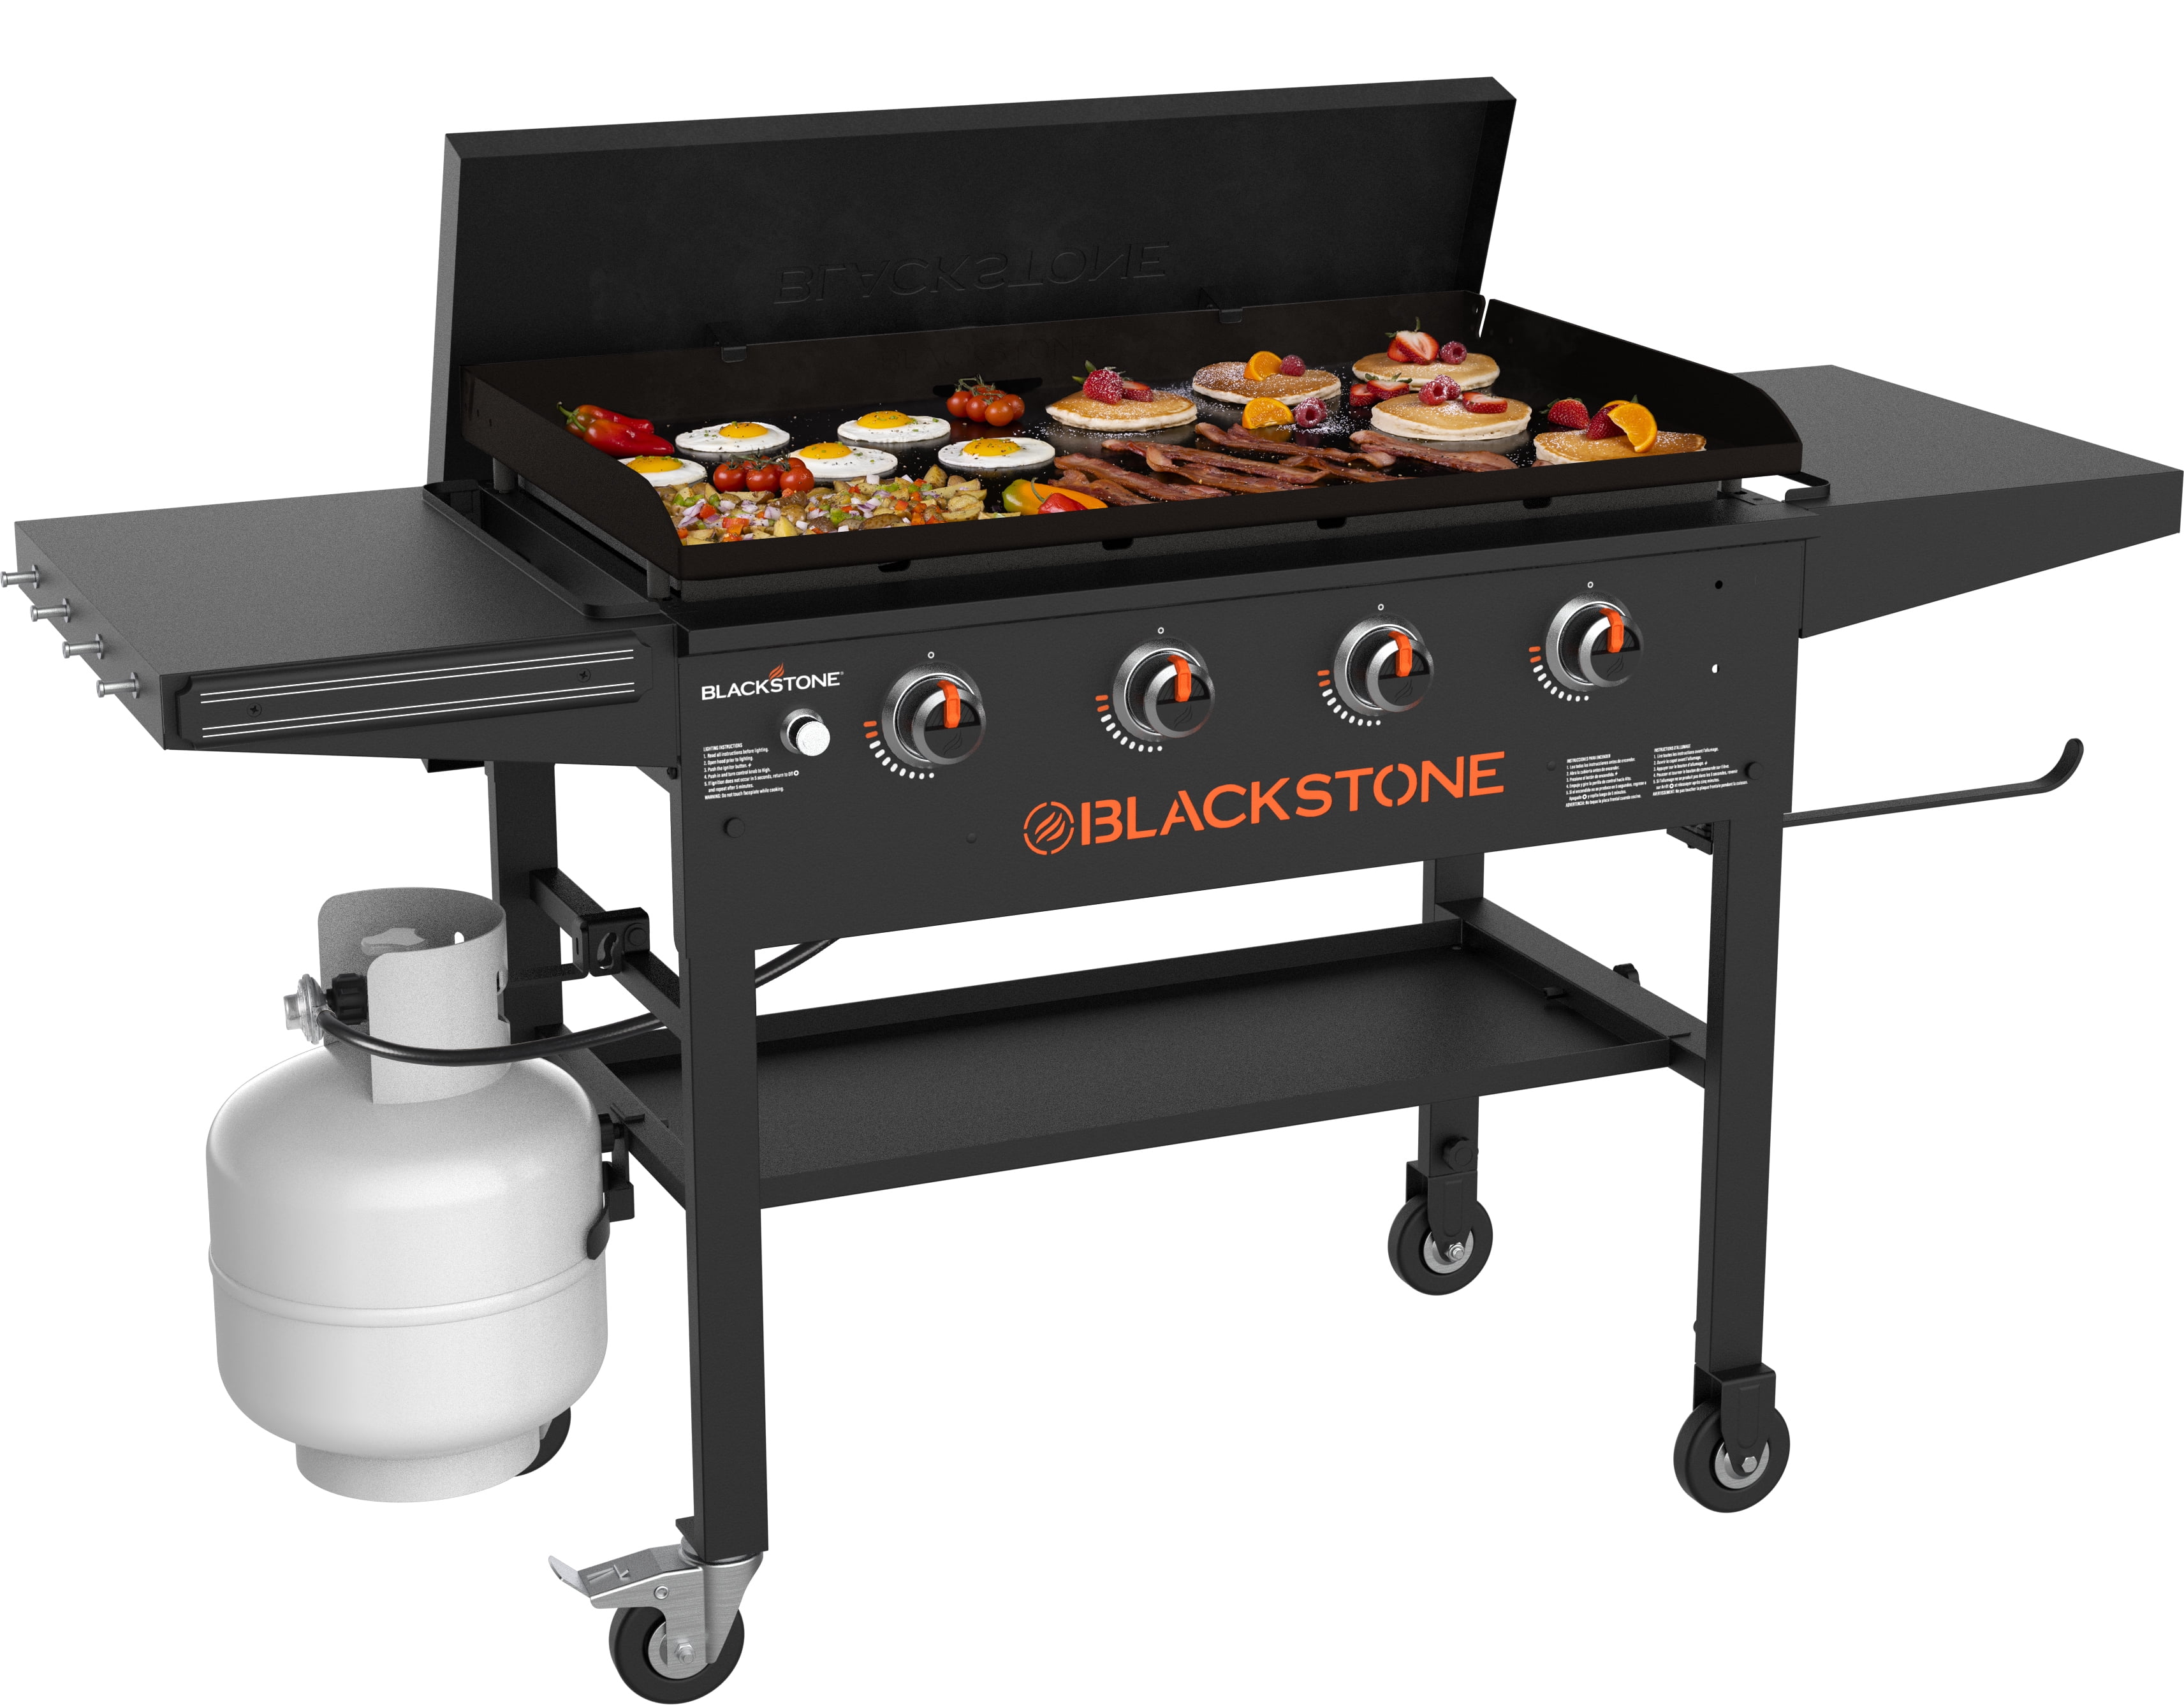 Blackstone 4-Burner 36" Propane Griddle Cooking Station with Hard Cover